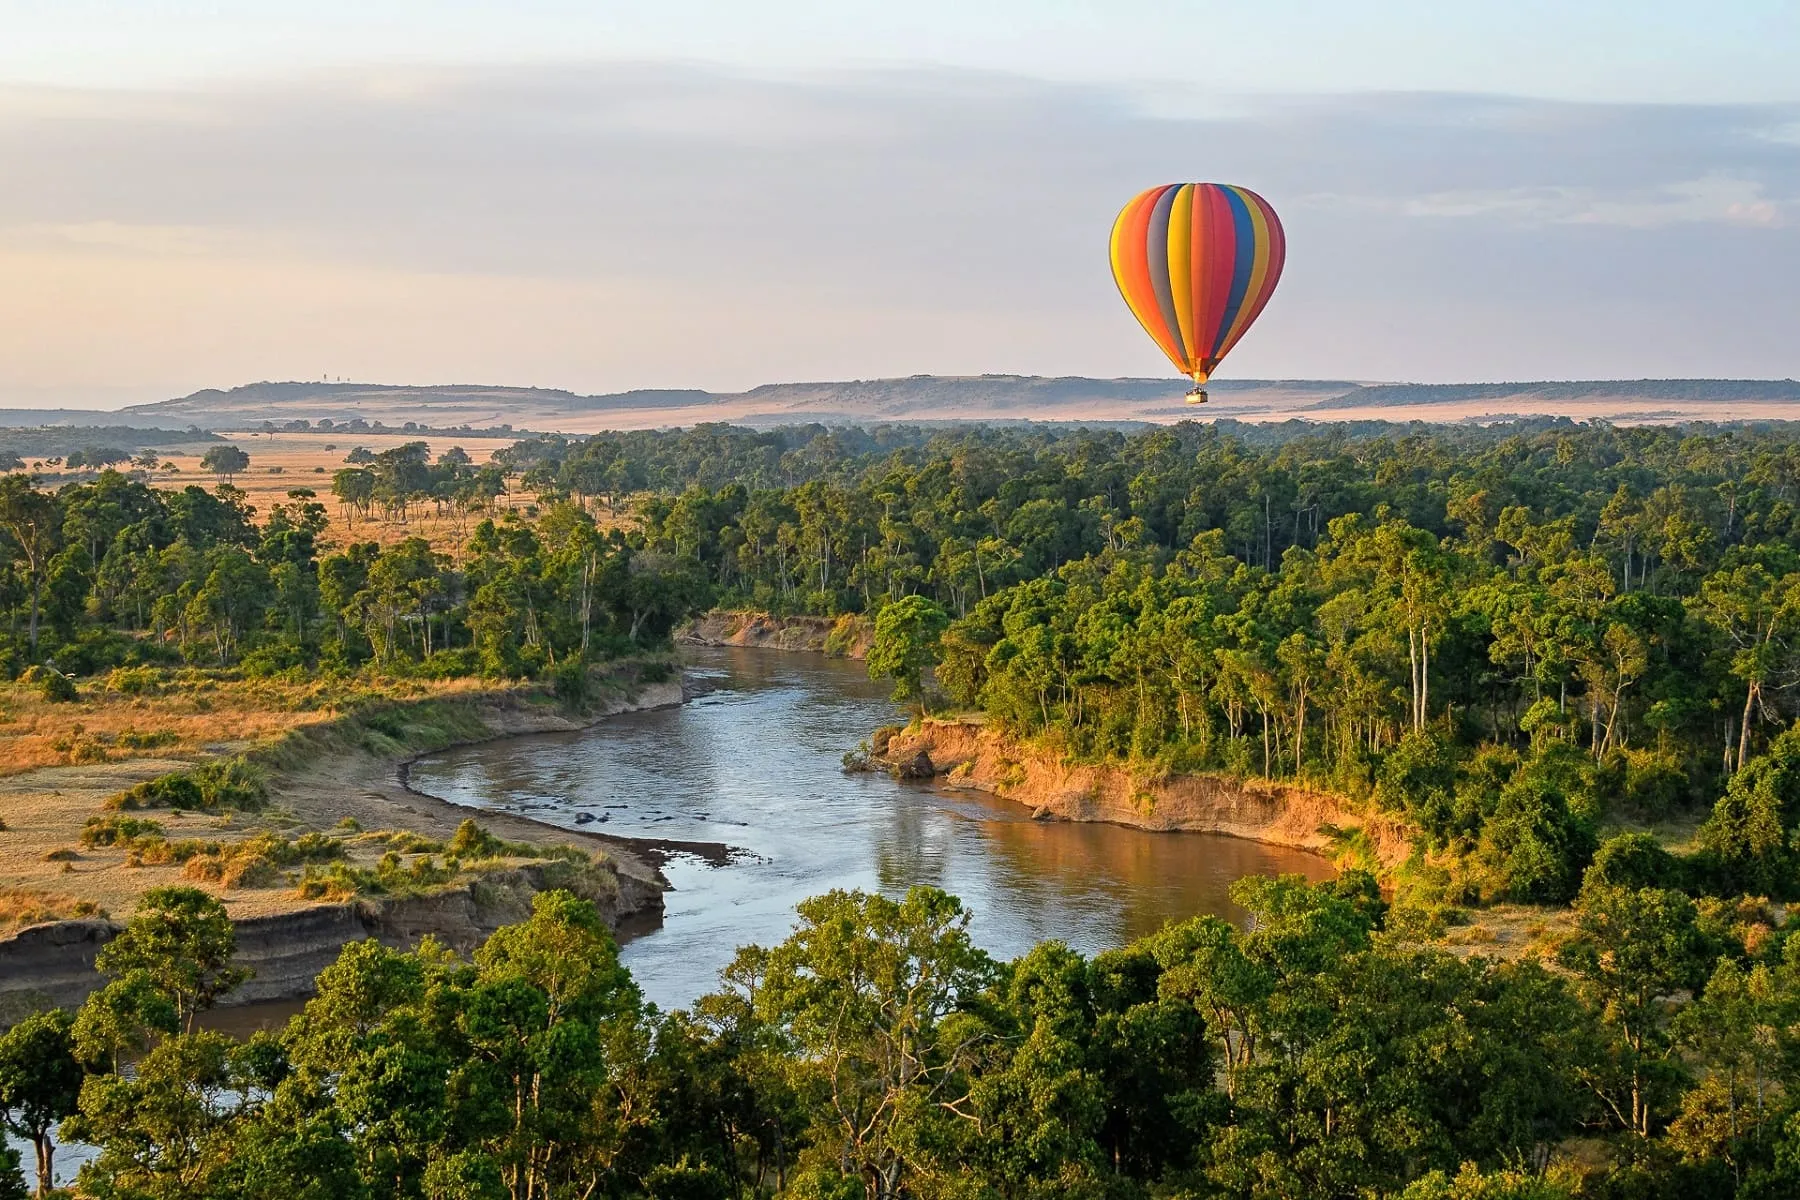 Best Kenya Tours - Hot Air balloon is a good addition to a Kenya safari trip.